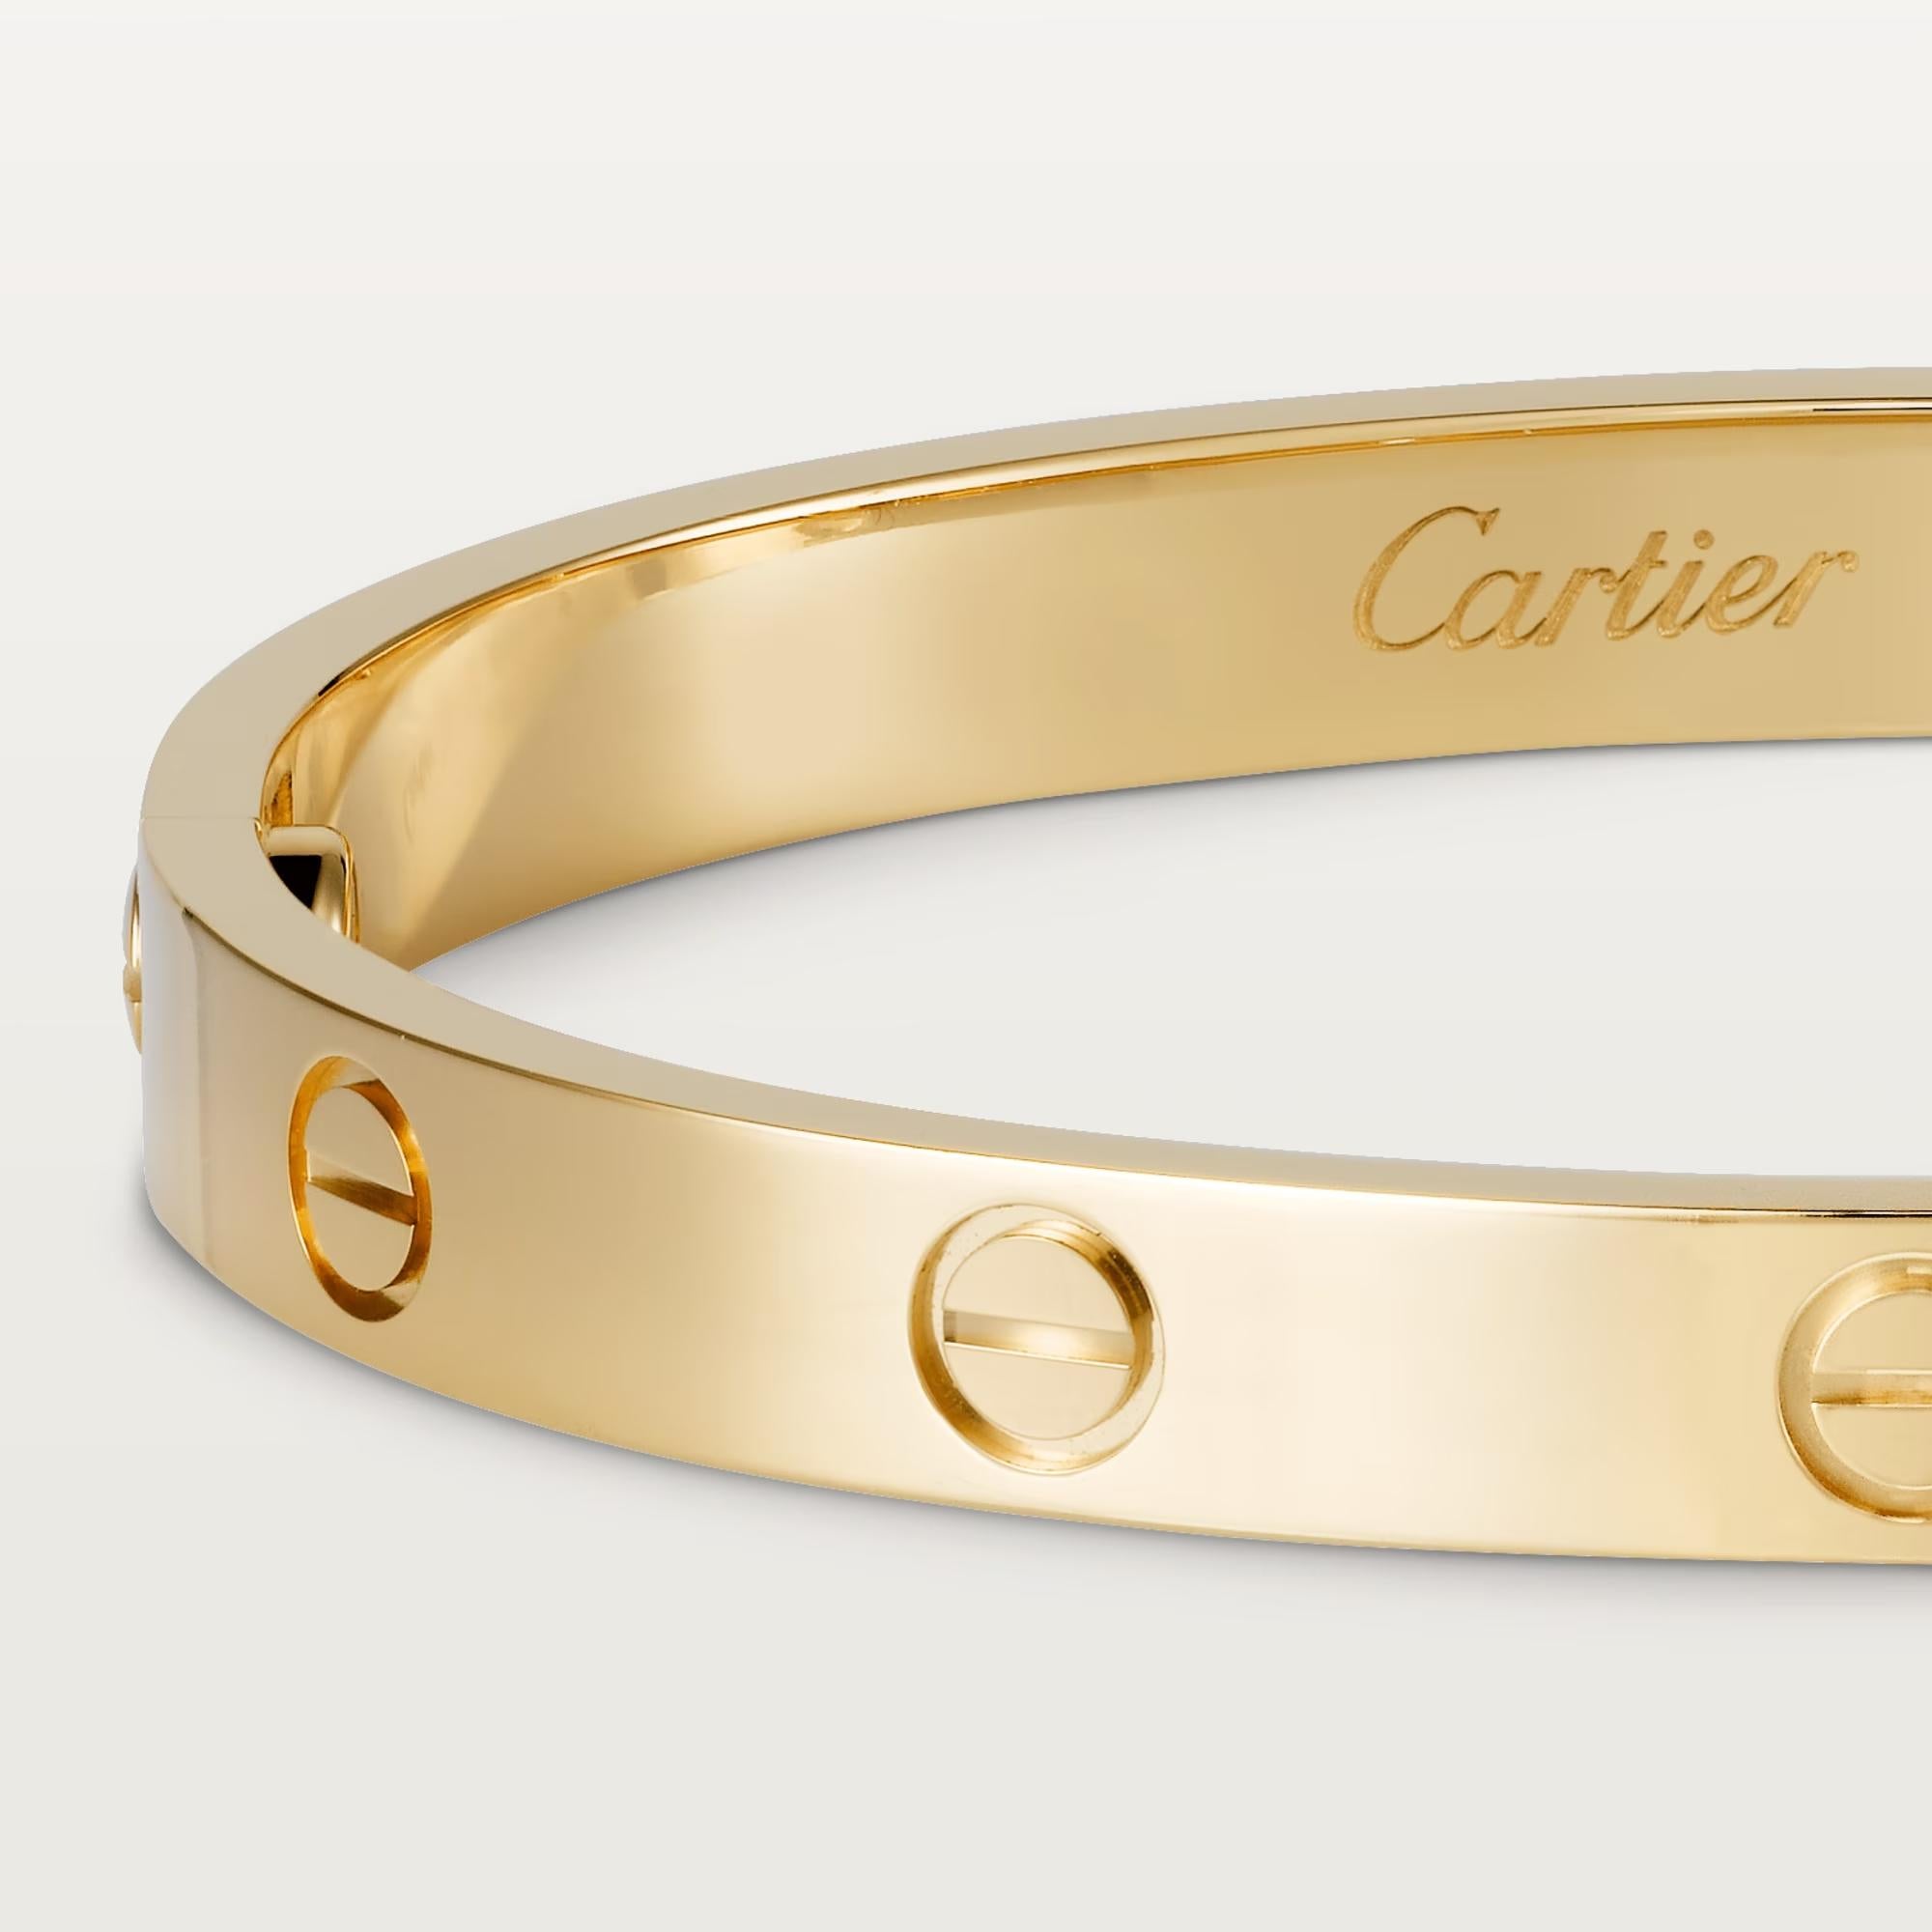 Designer: Cartier

Collection:  Love

Style: Bracelet

Metal: Yellow Gold 

Metal Purity: 18K 

Bracelet Size: 17

Hallmarks: Cartier; Serial #

Includes:  24 Months Brilliance Jewels Warranty

                 Cartier Box &  Certificate of